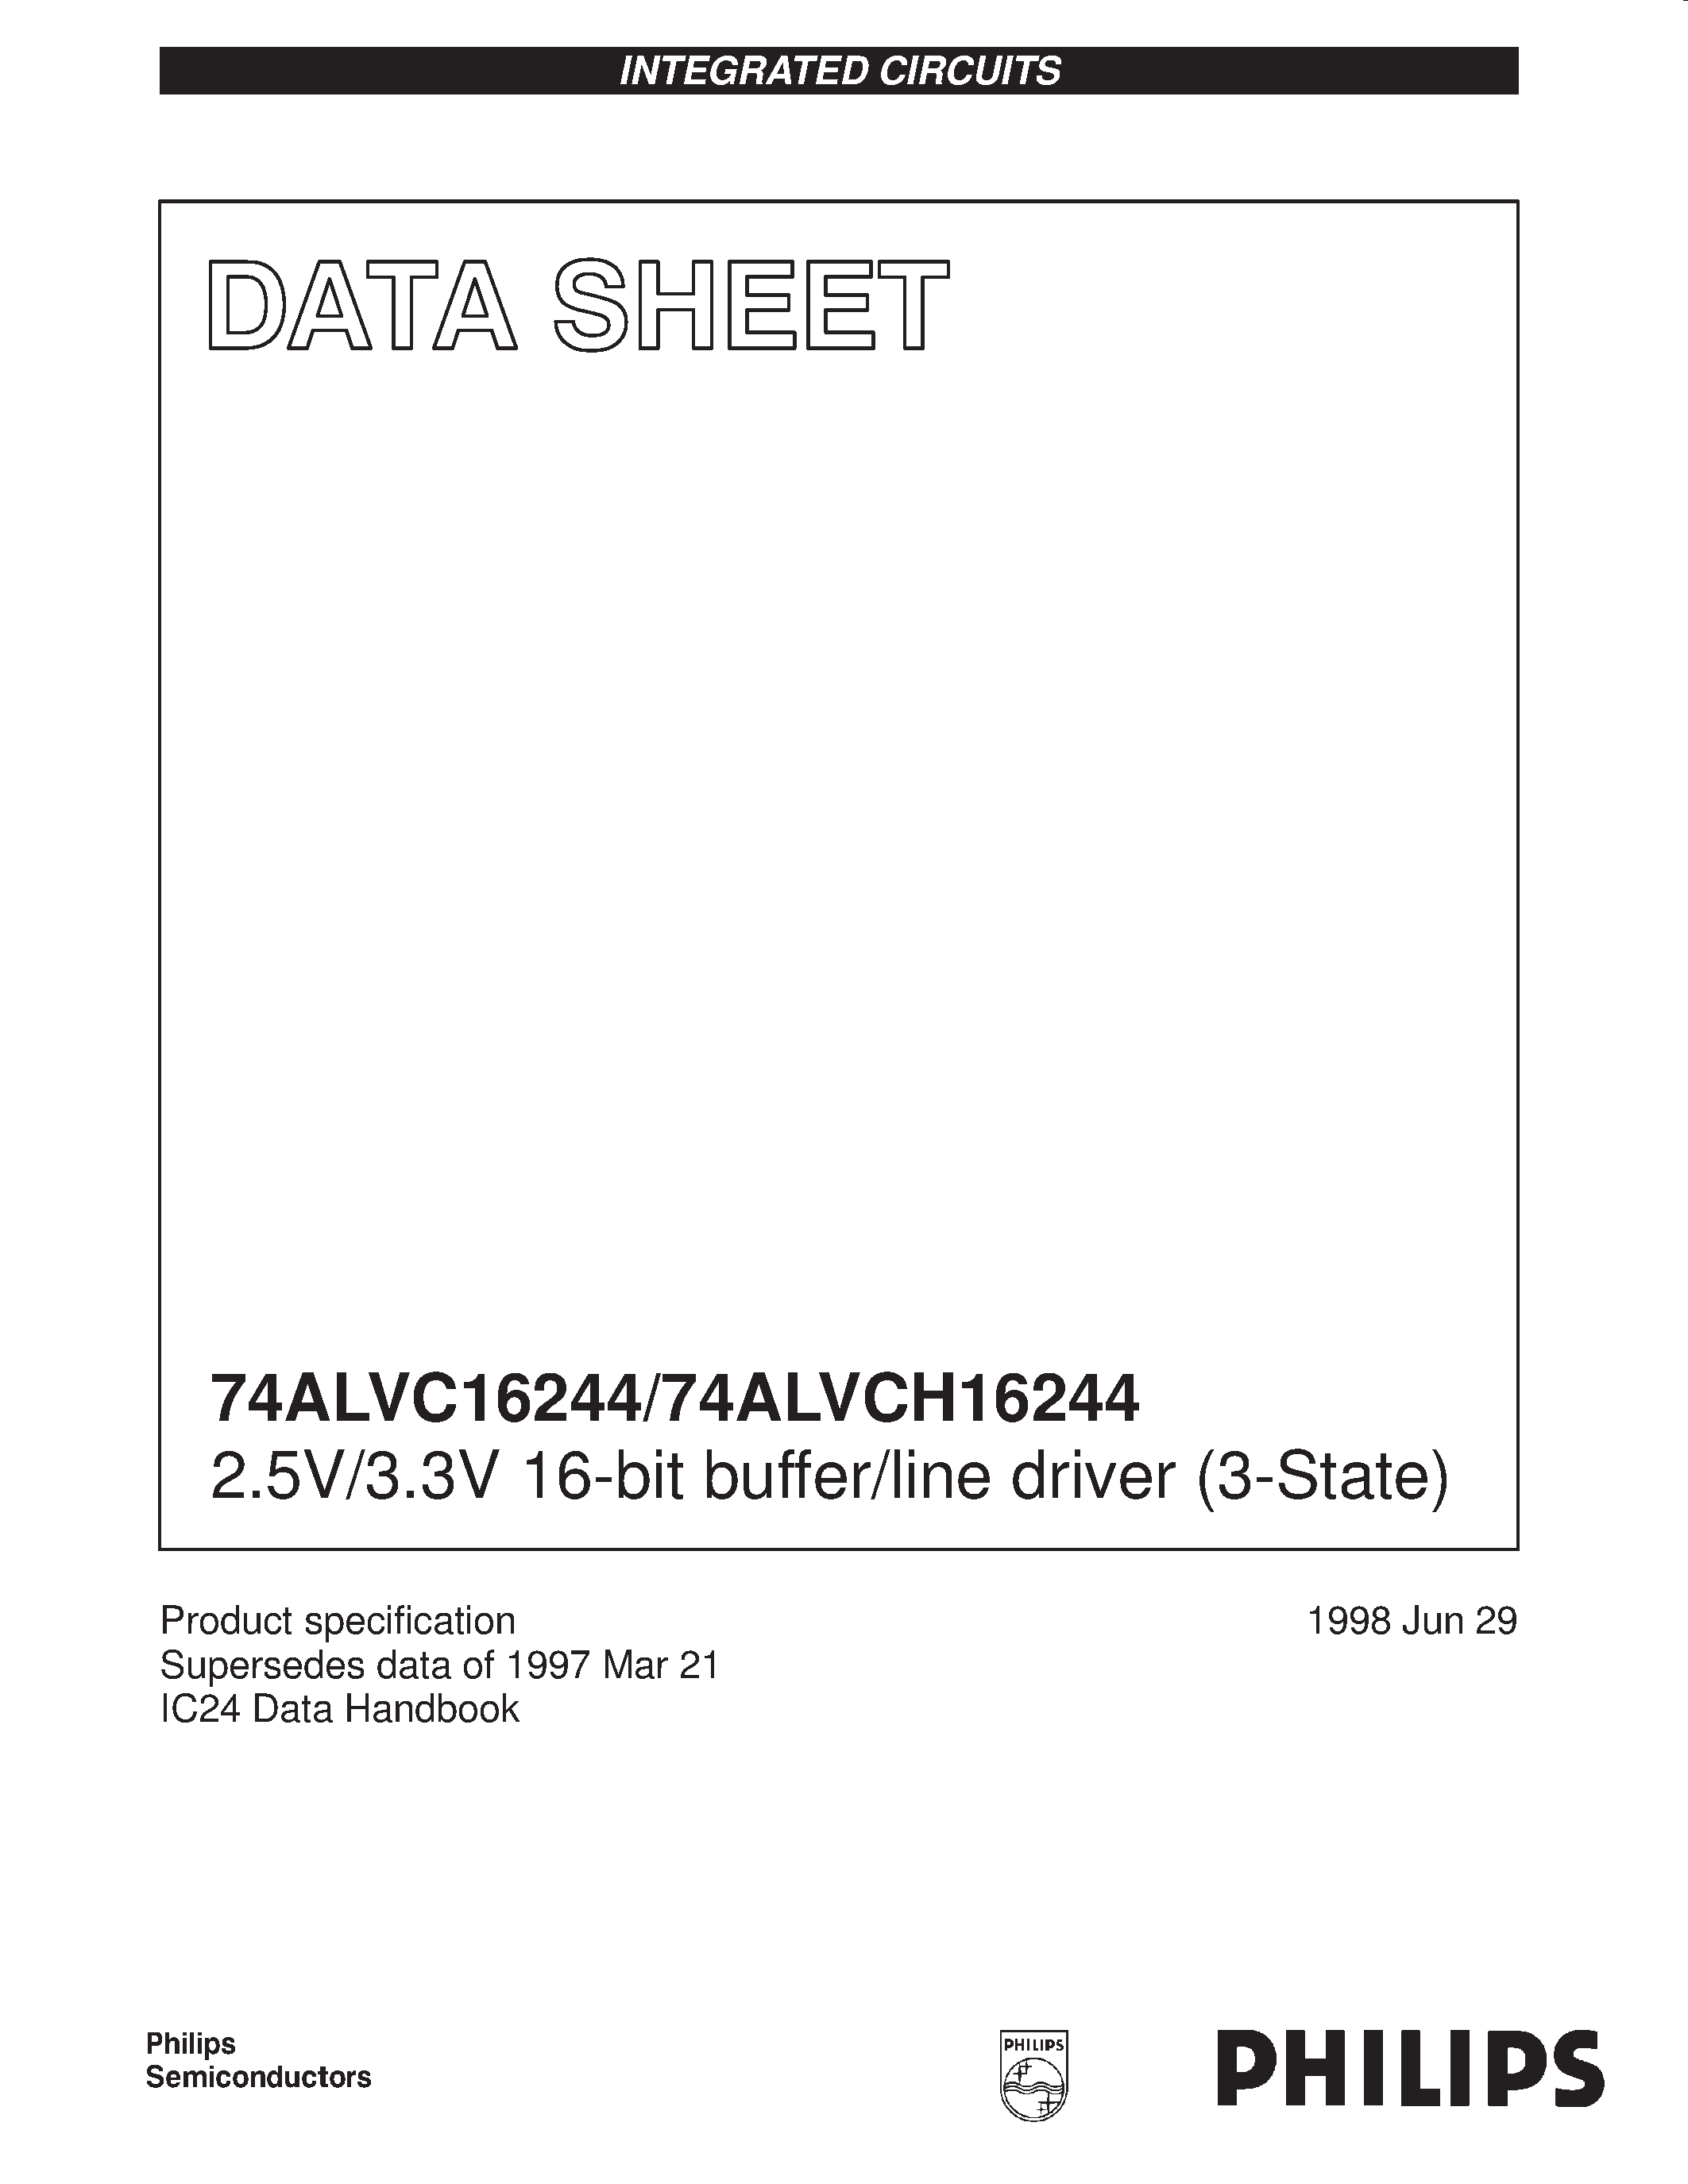 Даташит 74ALVC16244DGG - 2.5V/3.3V 16-bit buffer/line driver 3-State страница 1